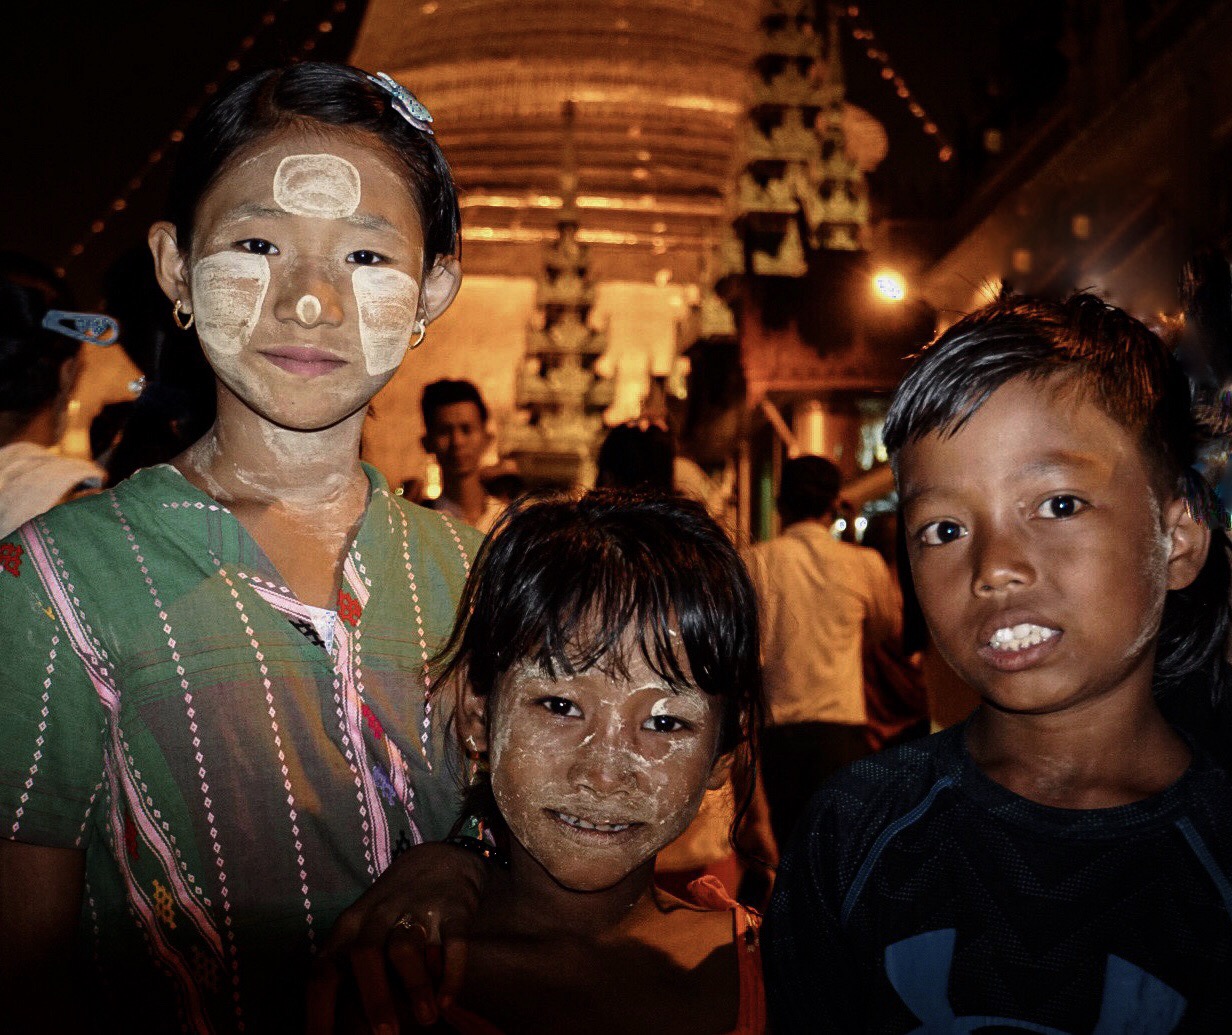 Burmese kids celebrating The Tazaungdaing Festival in Shwedagon Pagoda, Yangon.